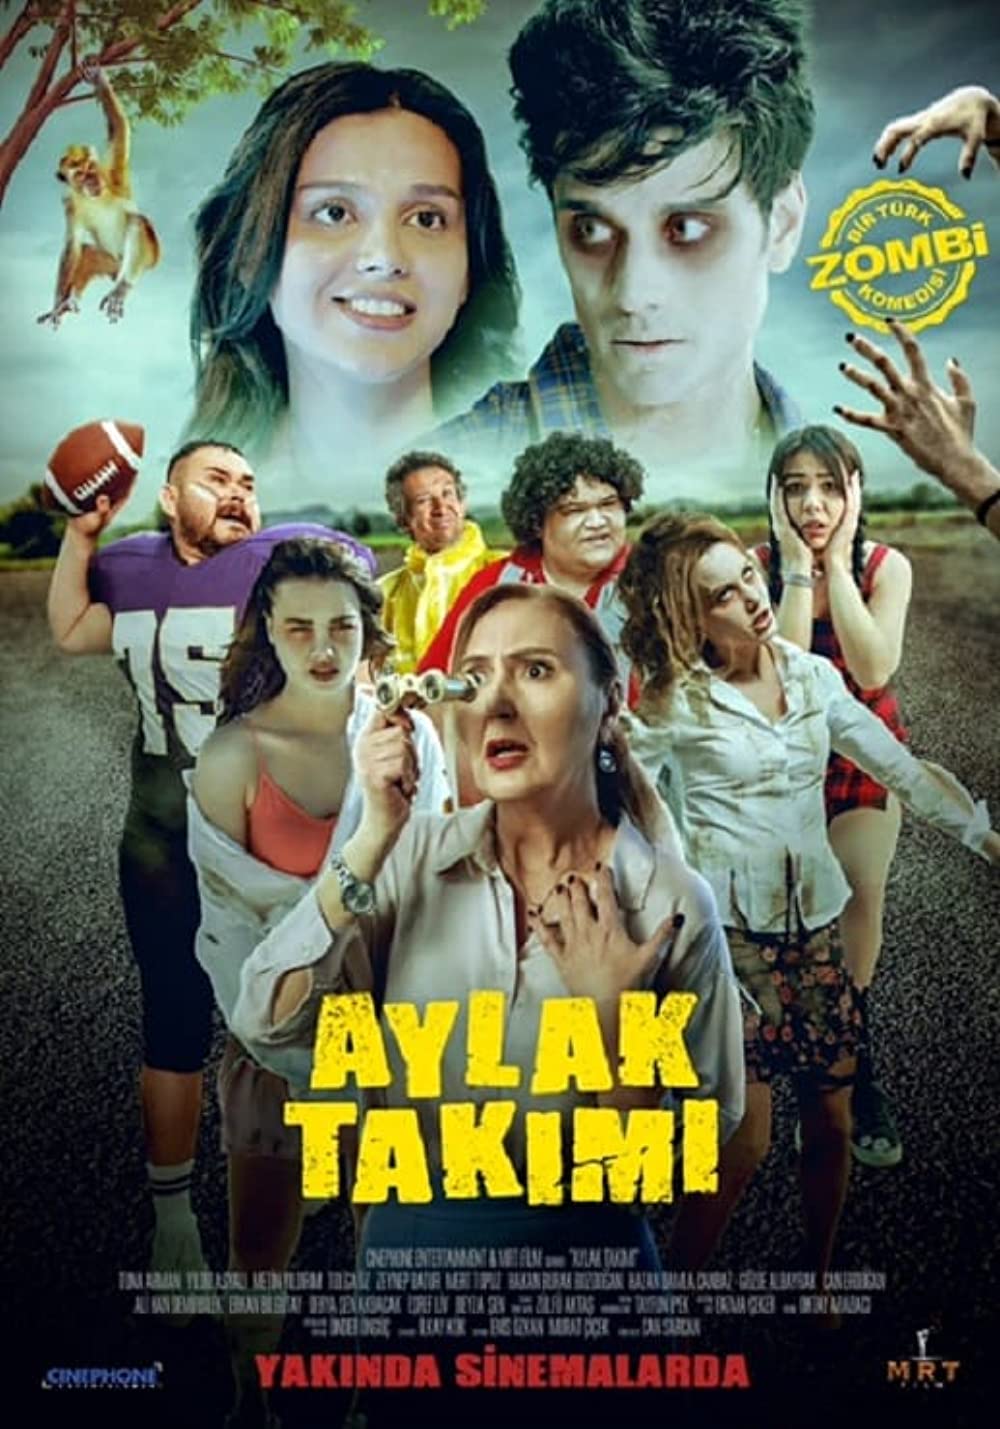 Filmbeschreibung zu Aylak Takimi